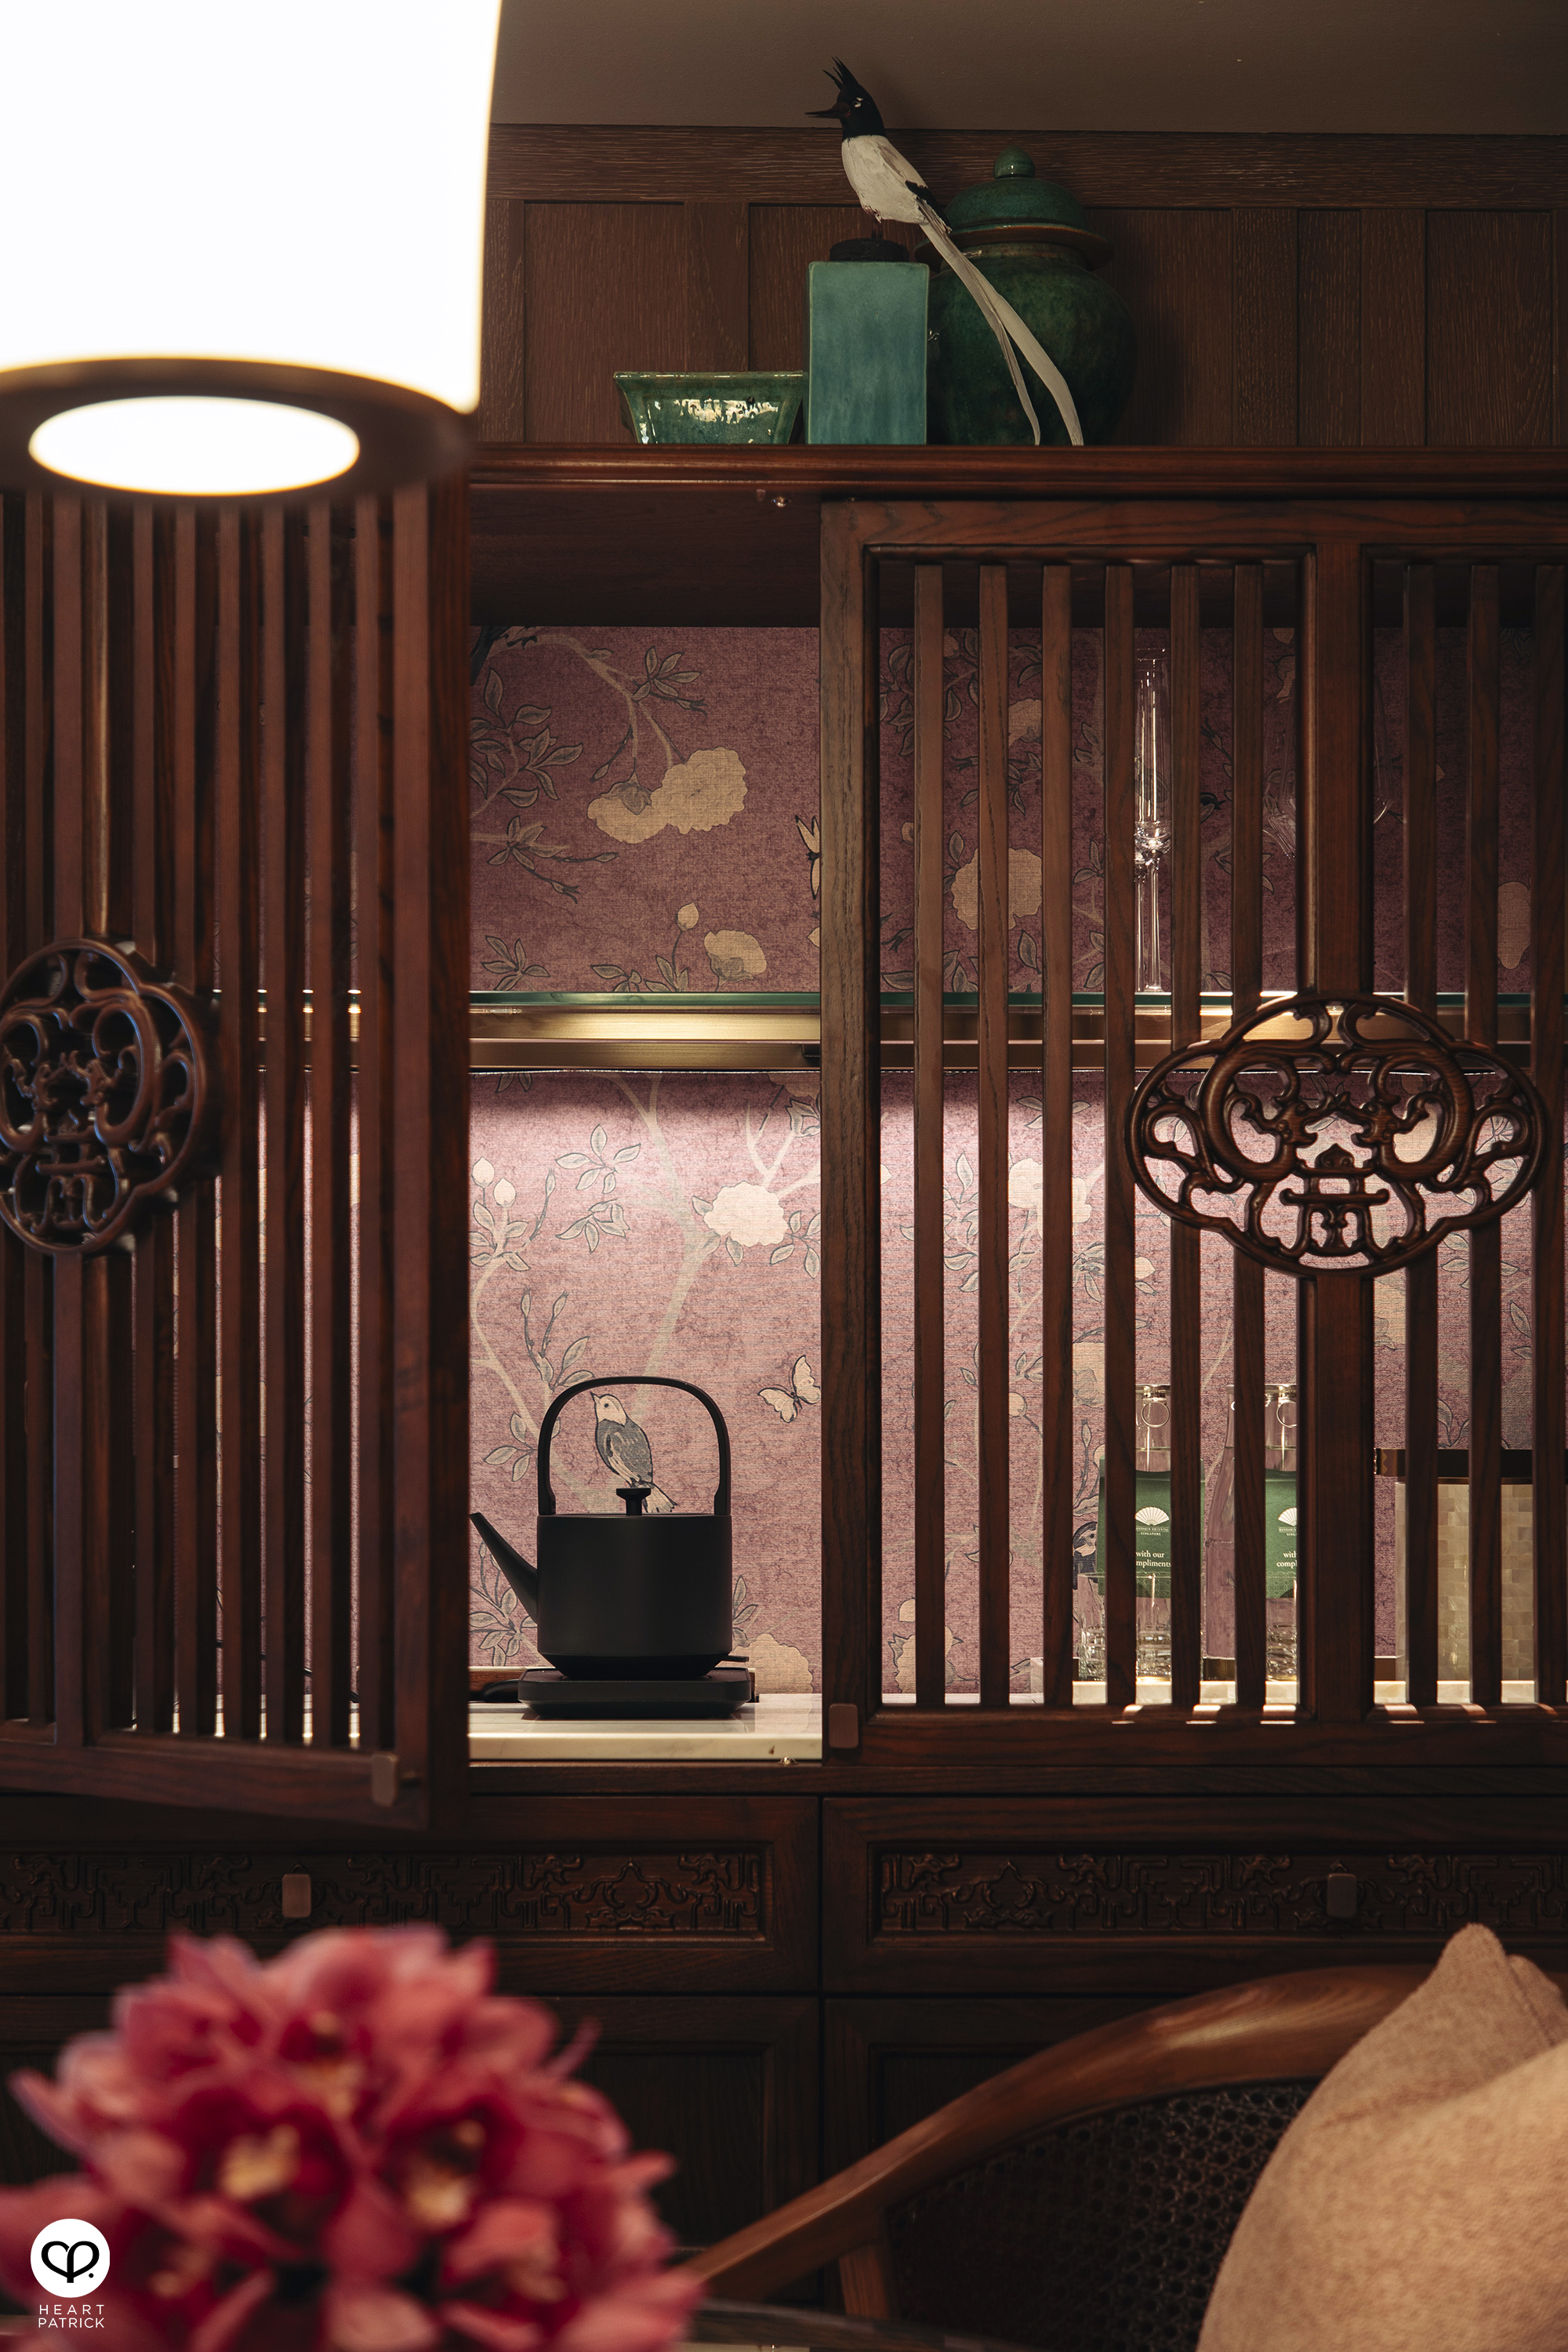 heartpatrick architecture interior photography mandarin oriental hotel singapore